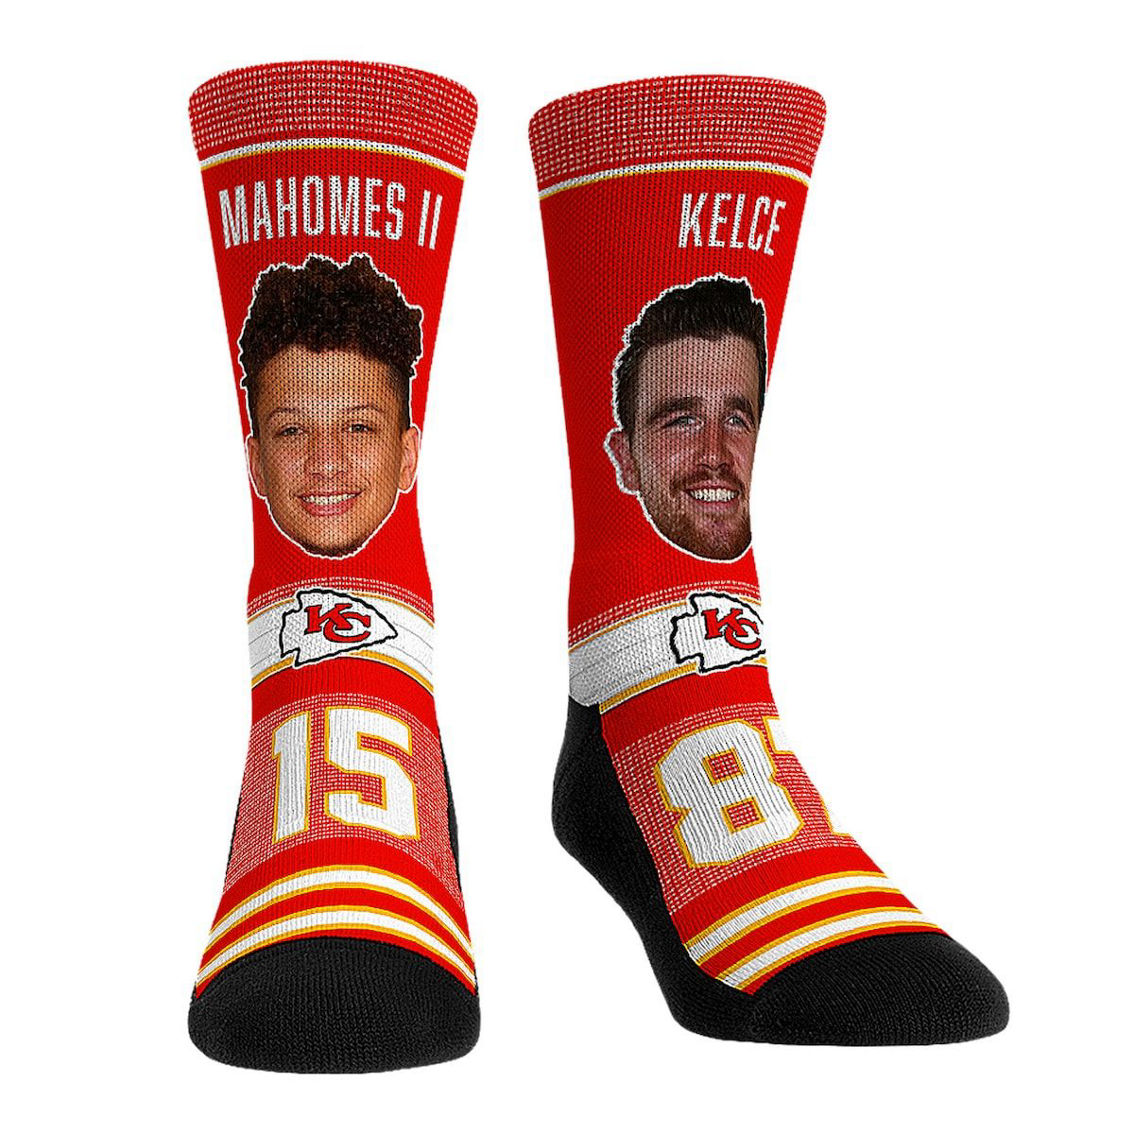 Rock Em Socks Patrick Mahomes & Travis Kelce Kansas City Chiefs Player Teammates Crew Socks - Image 2 of 2